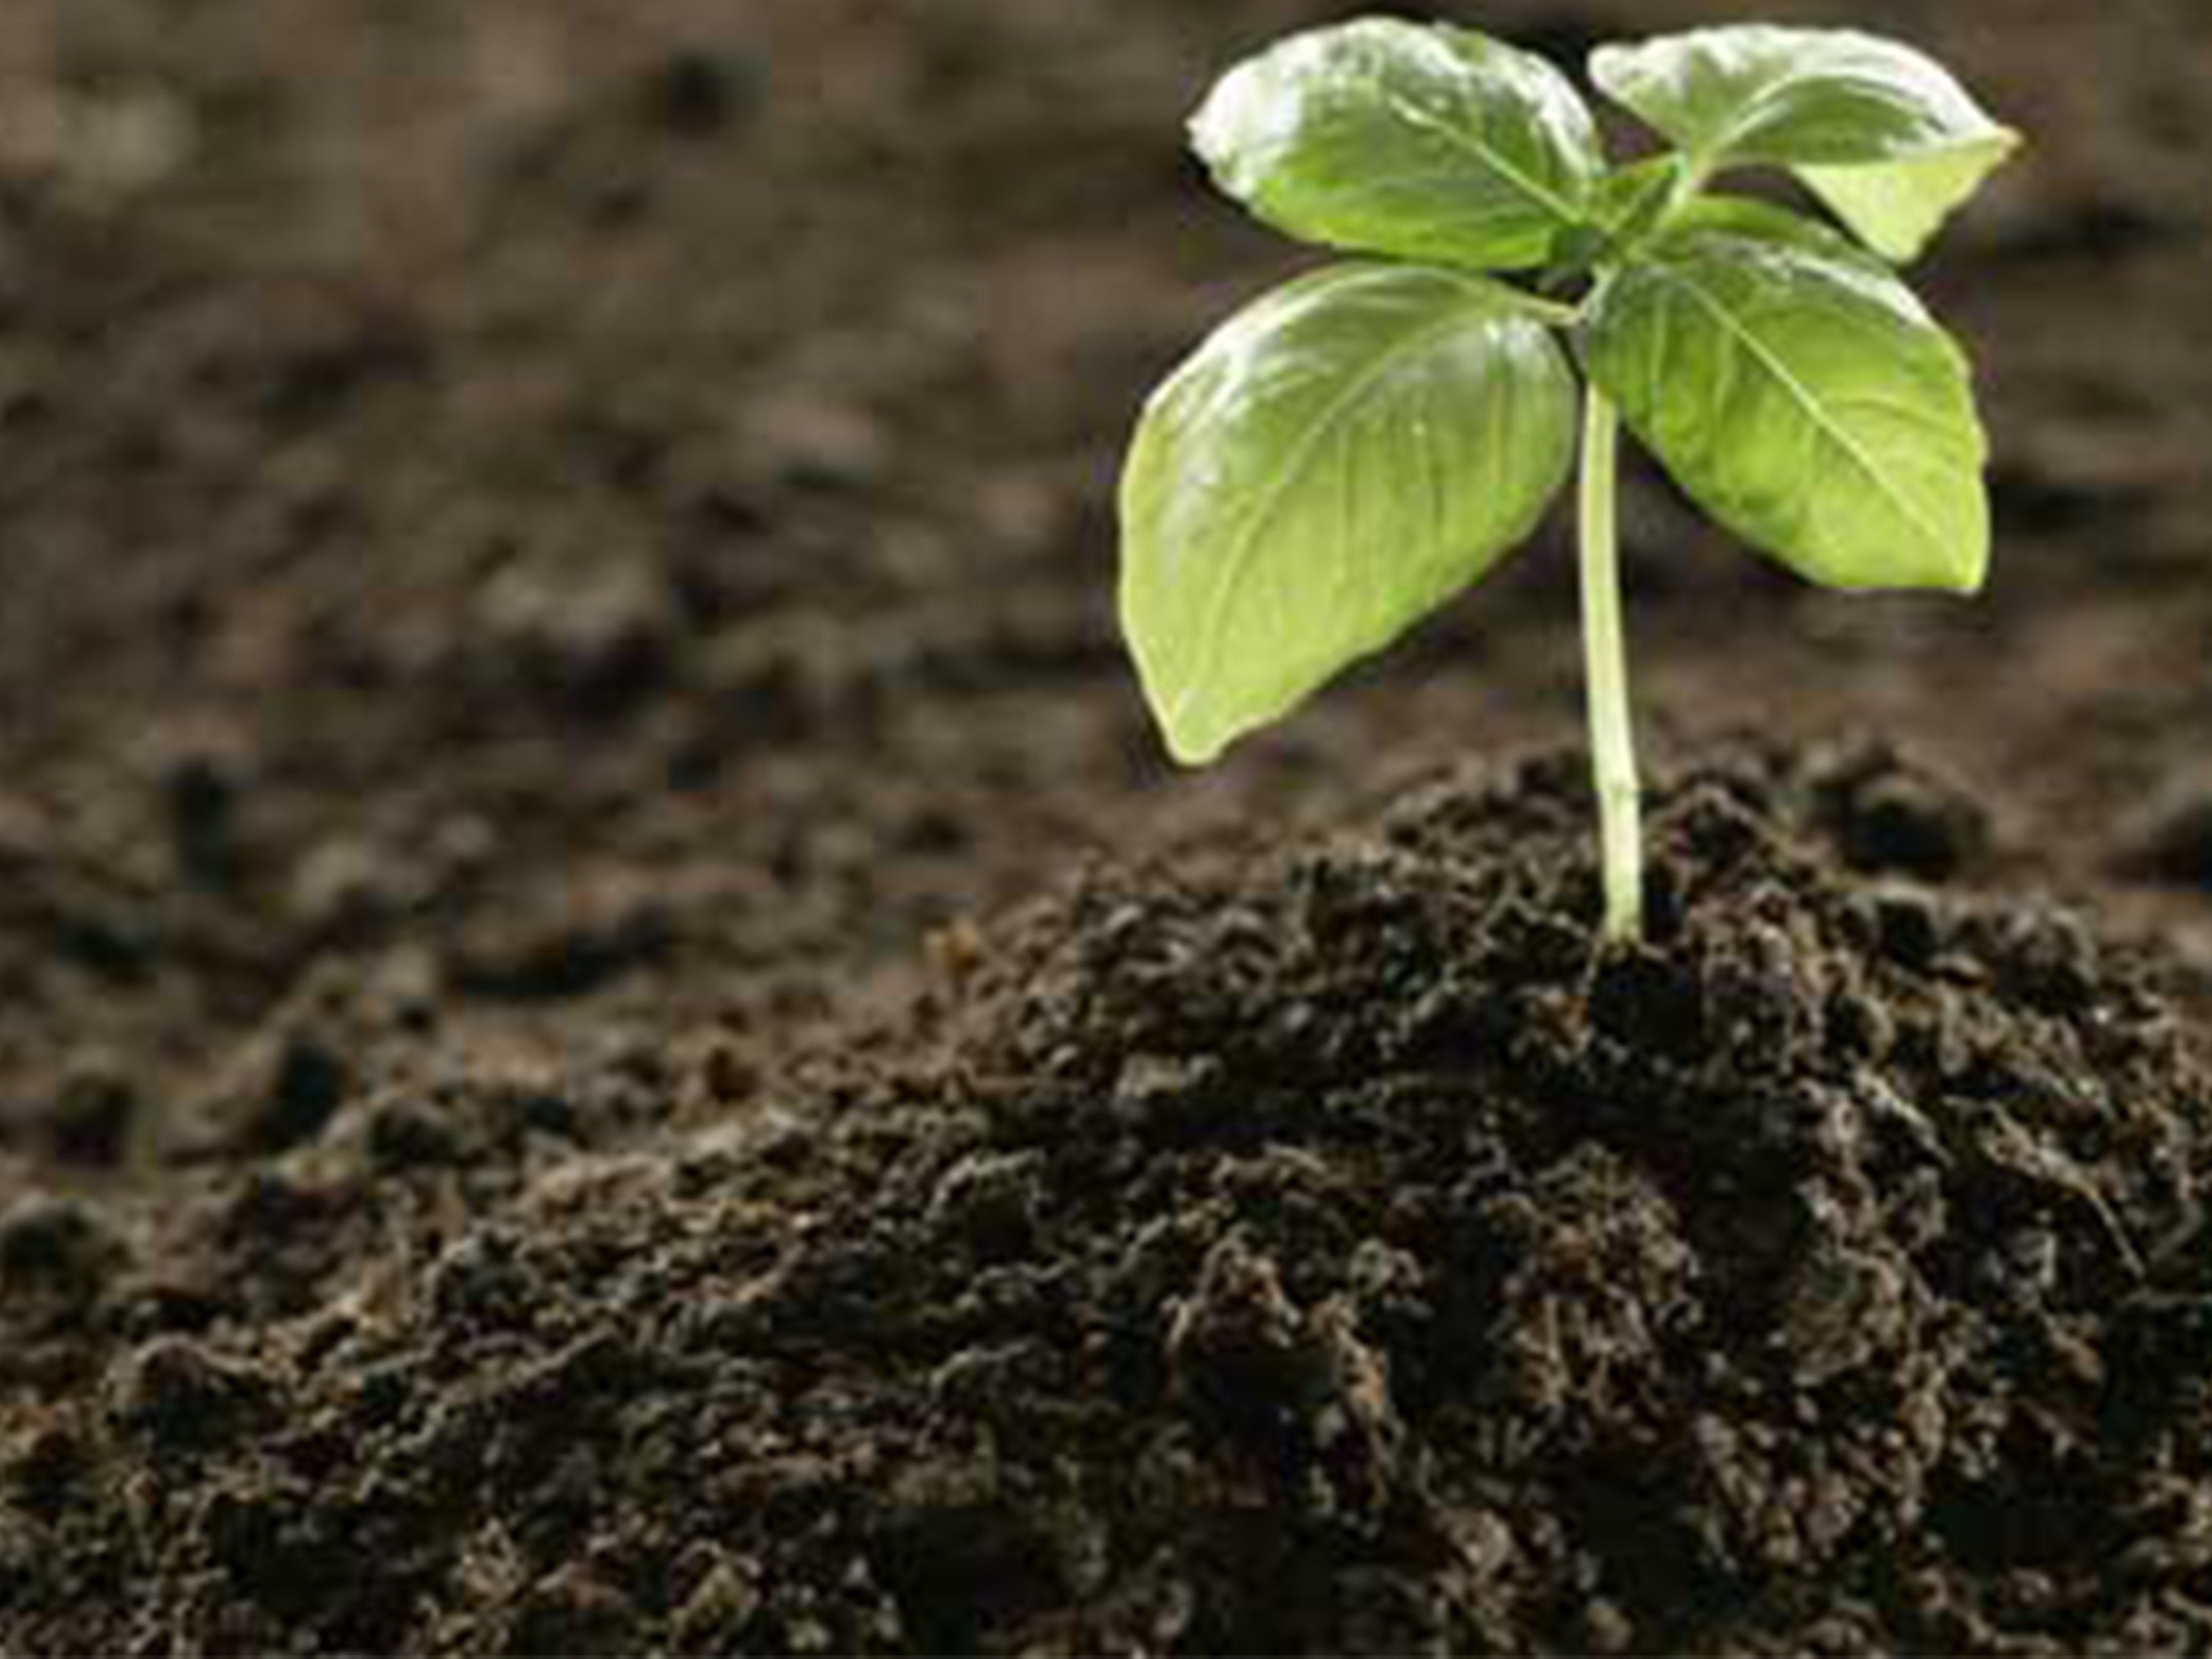 Converted Organics – Organic fertilizer companies see growing market